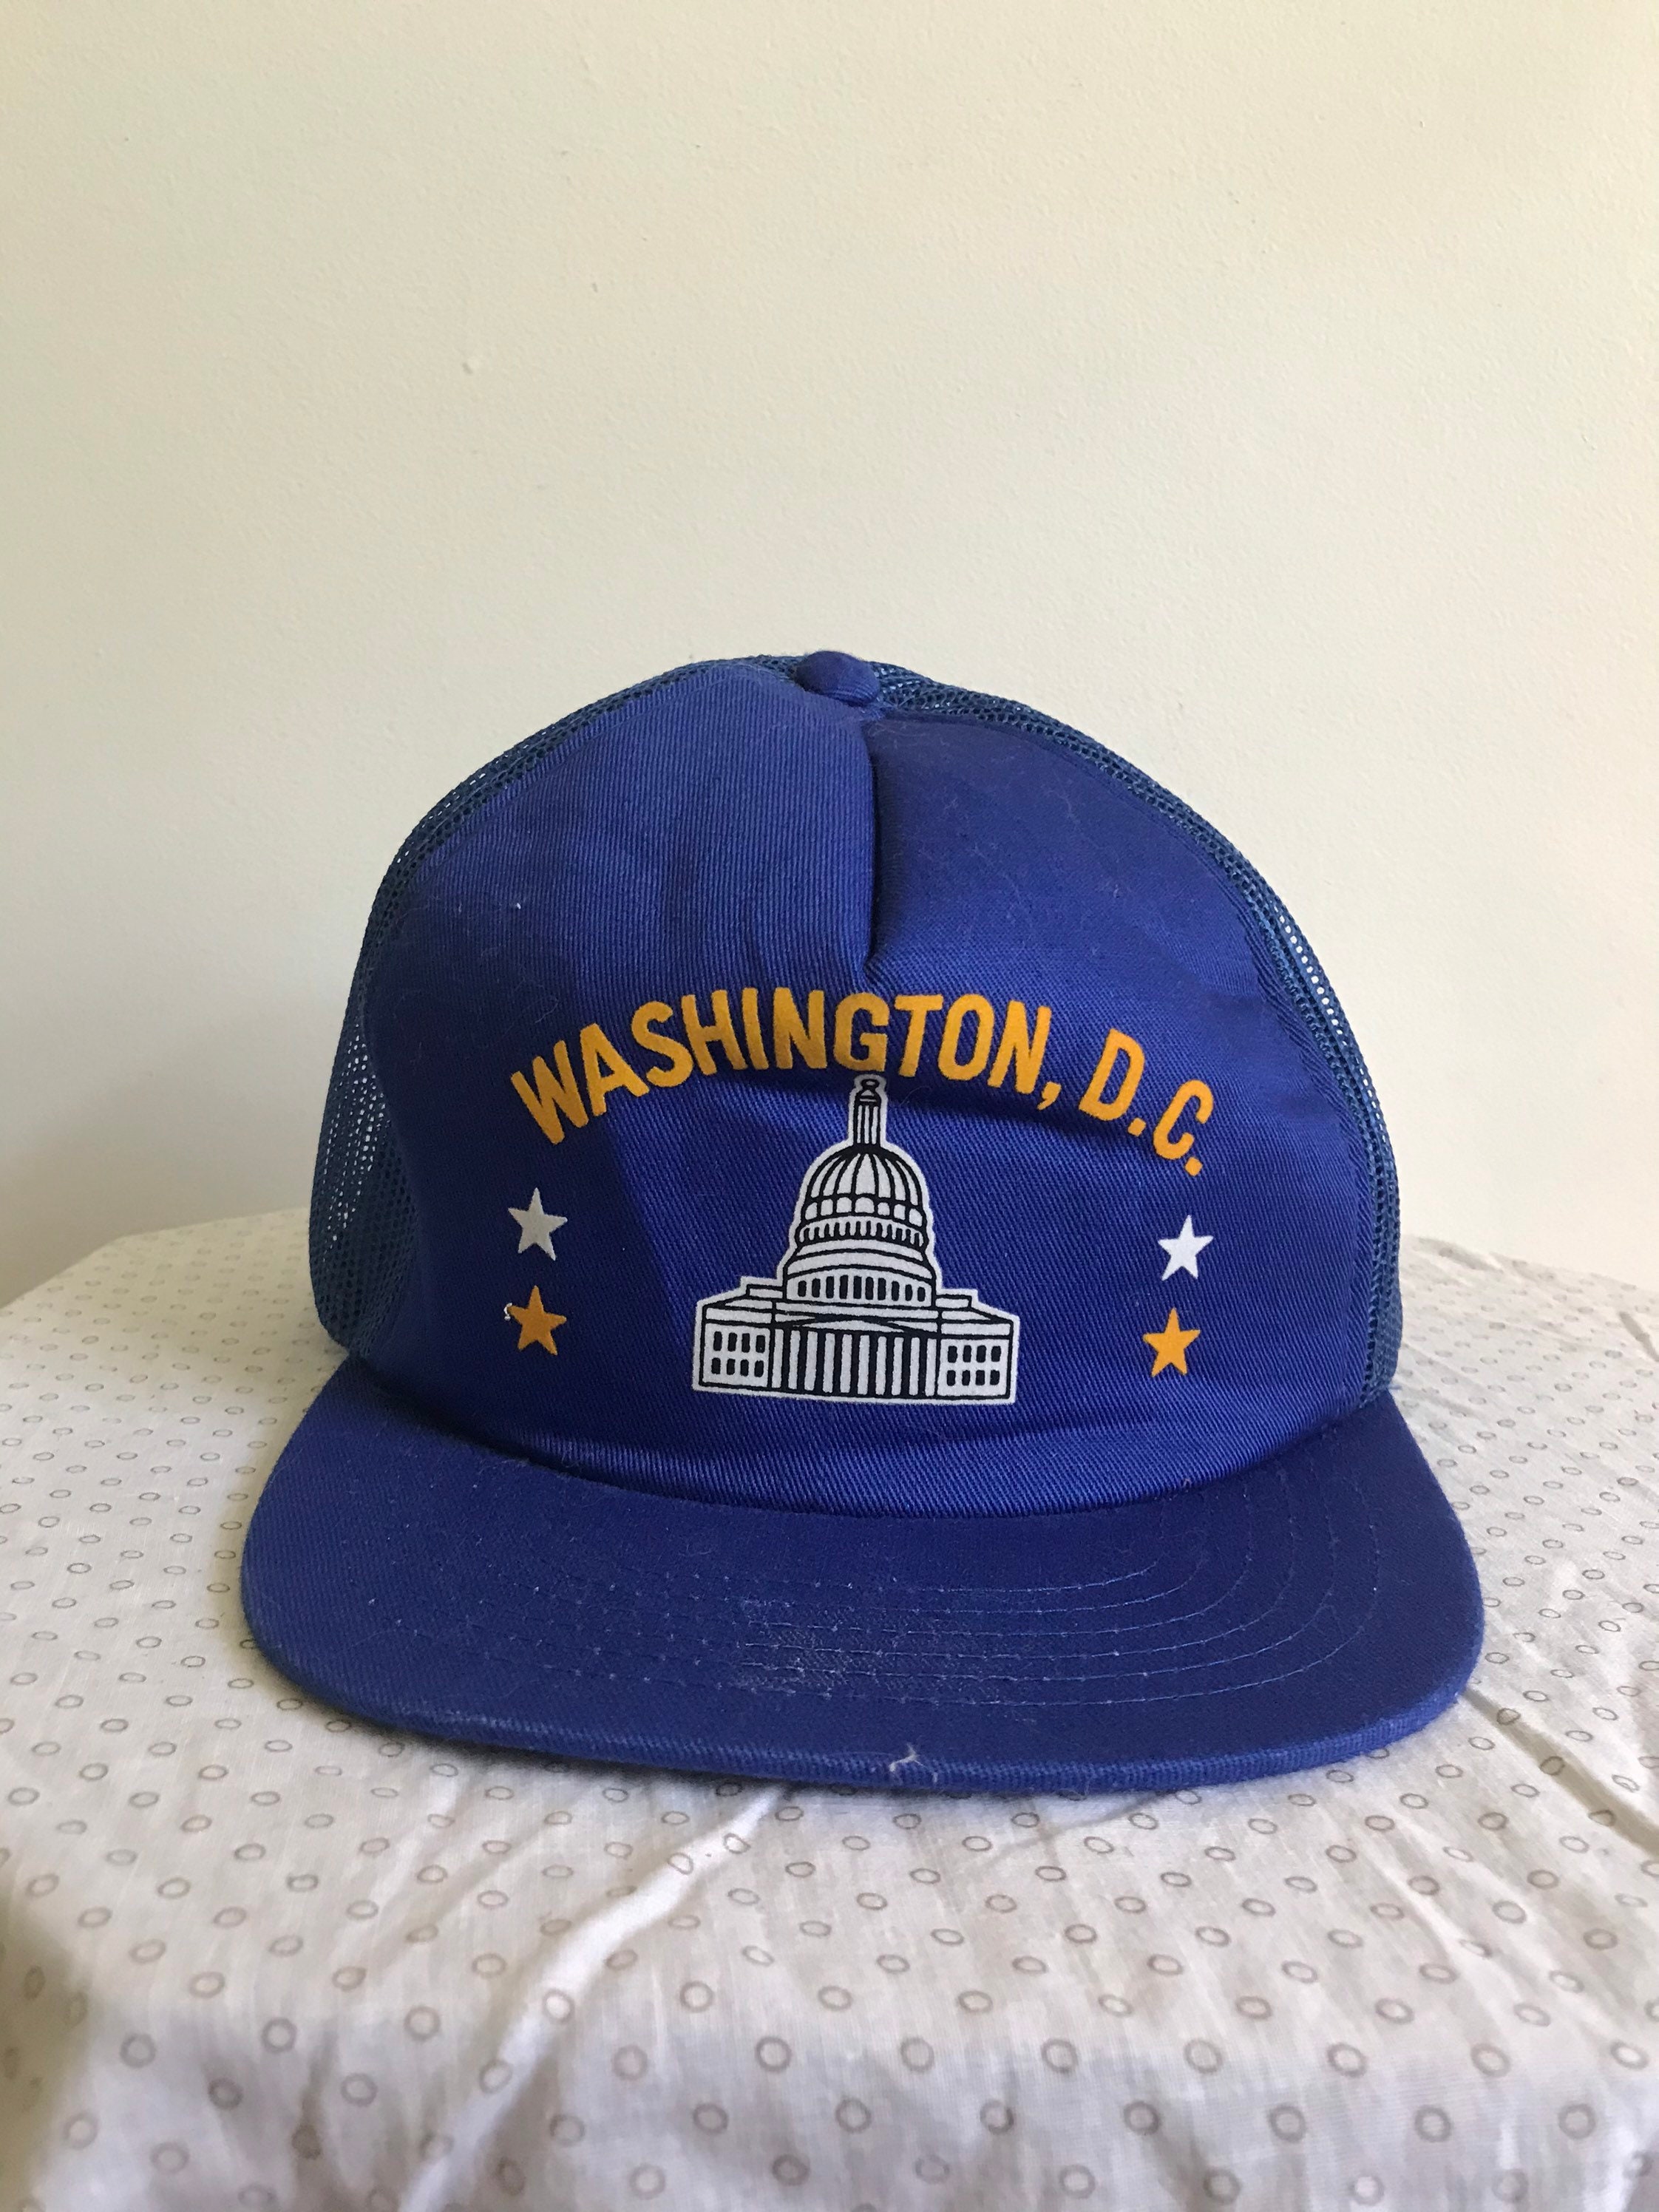 Vintage Washington DC souvenir hat | Etsy